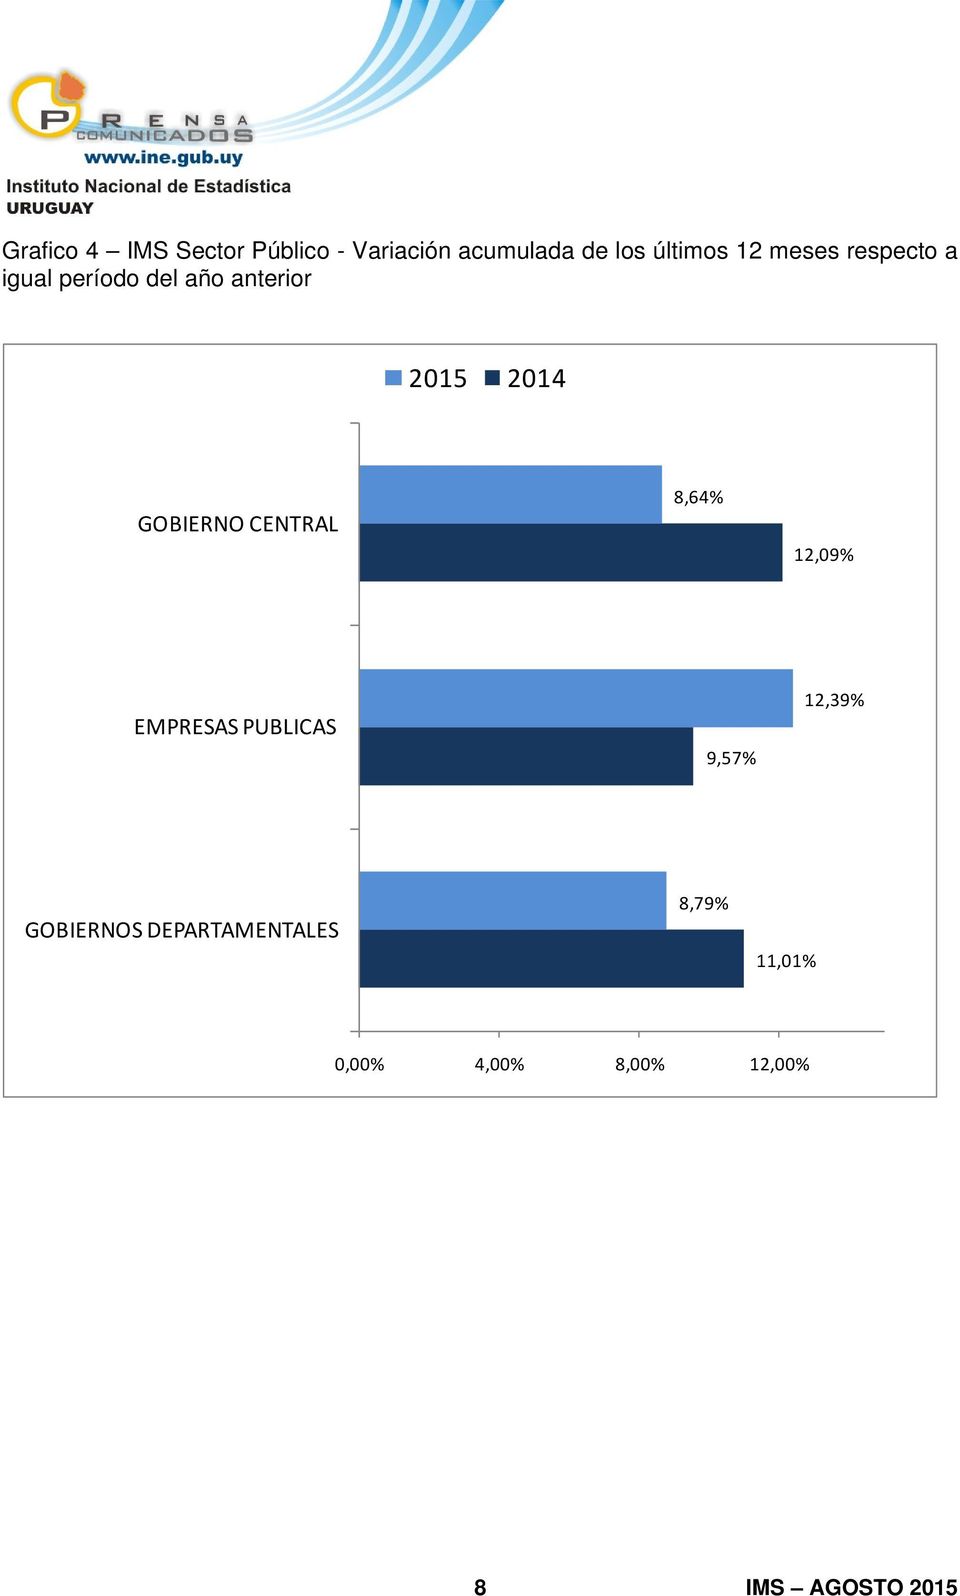 GOBIERNO CENTRAL 8,64% 12,09% EMPRESAS PUBLICAS 9,57% 12,39%